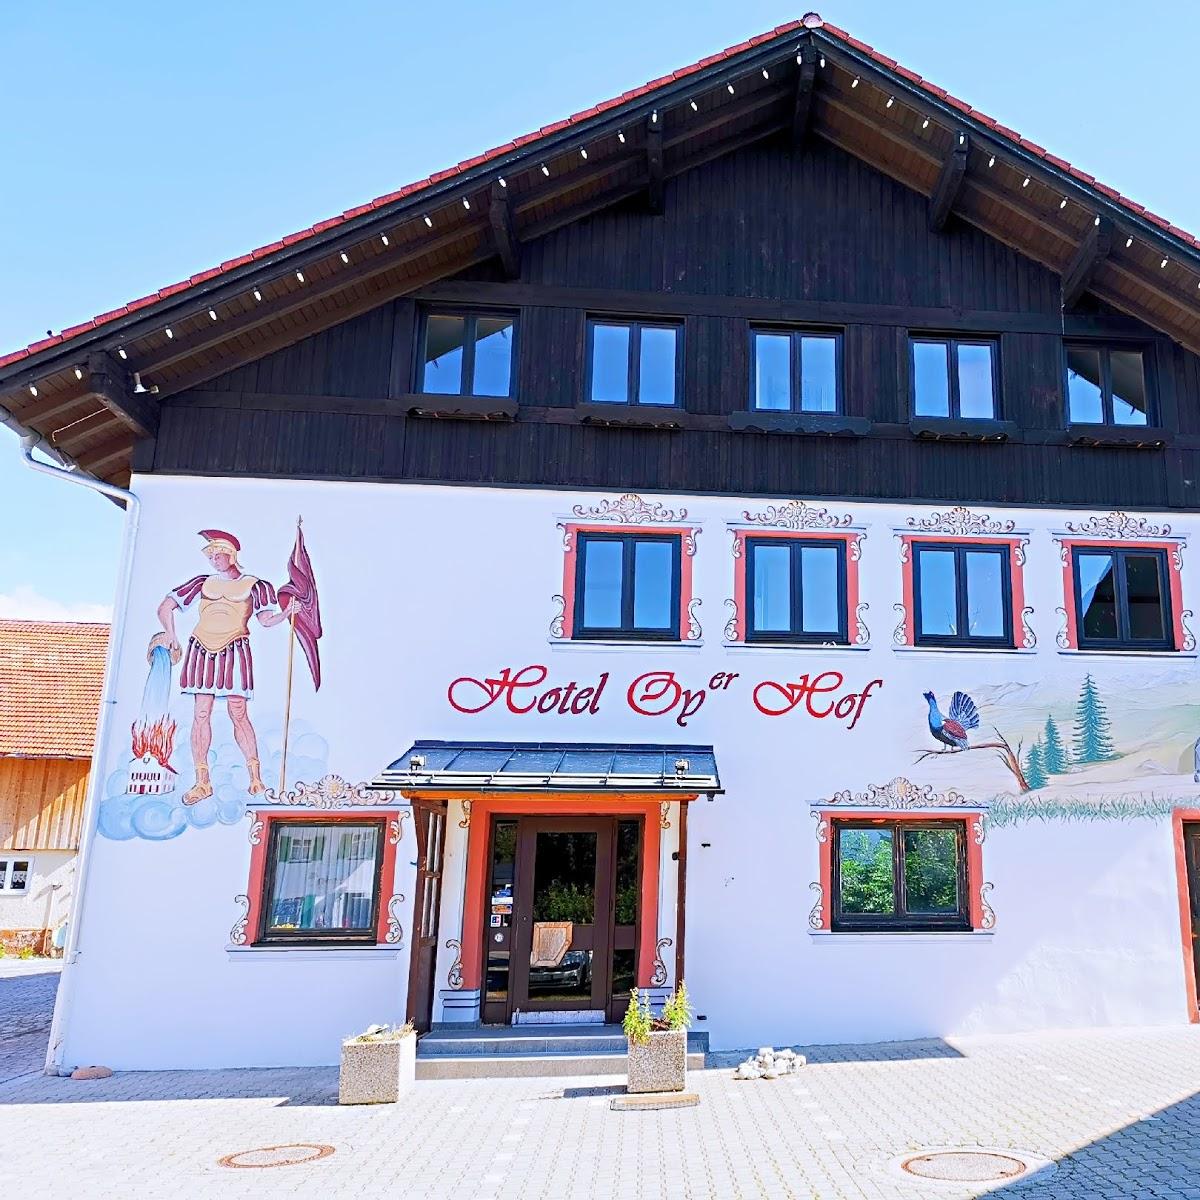 Restaurant "Hotel-Gasthof Ratskeller" in Oy-Mittelberg